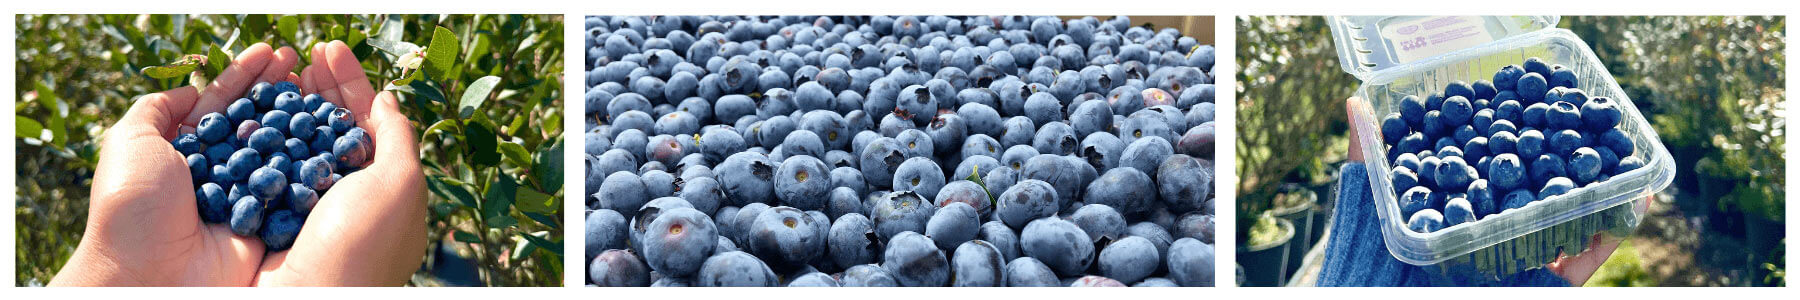 Florida Blueberries